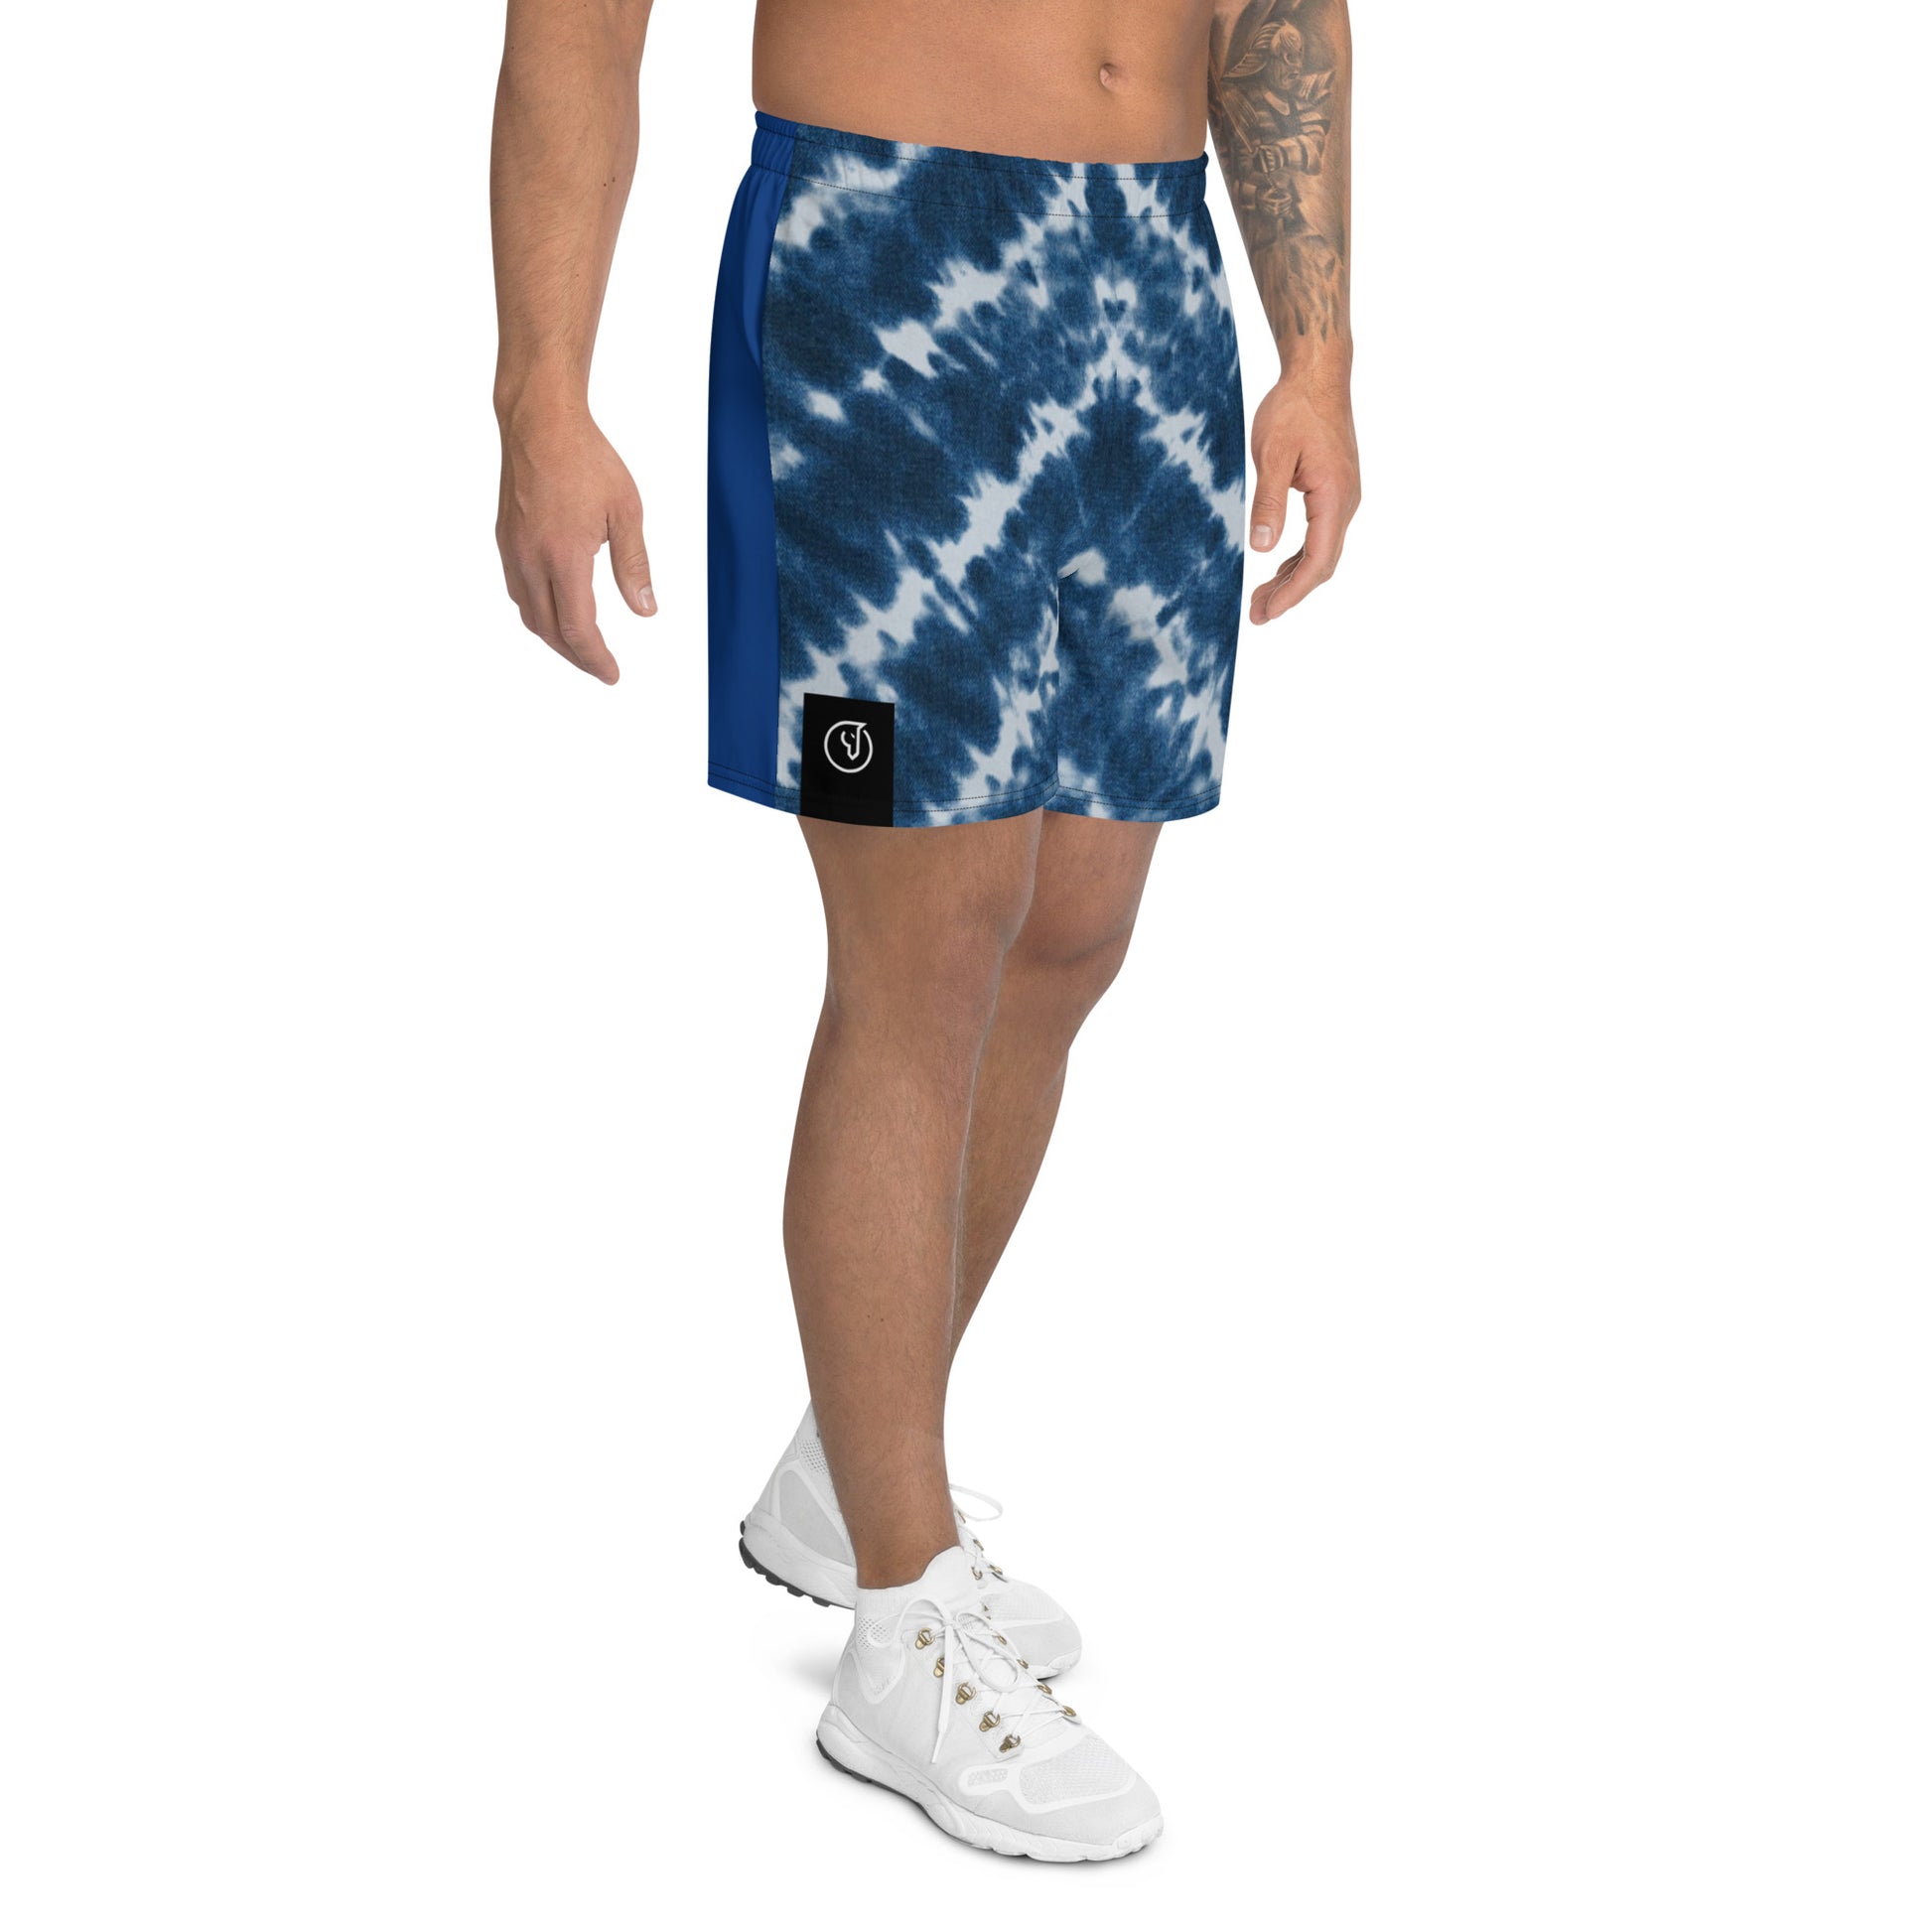 Humble Sportswear, men's color match activewear color block shorts